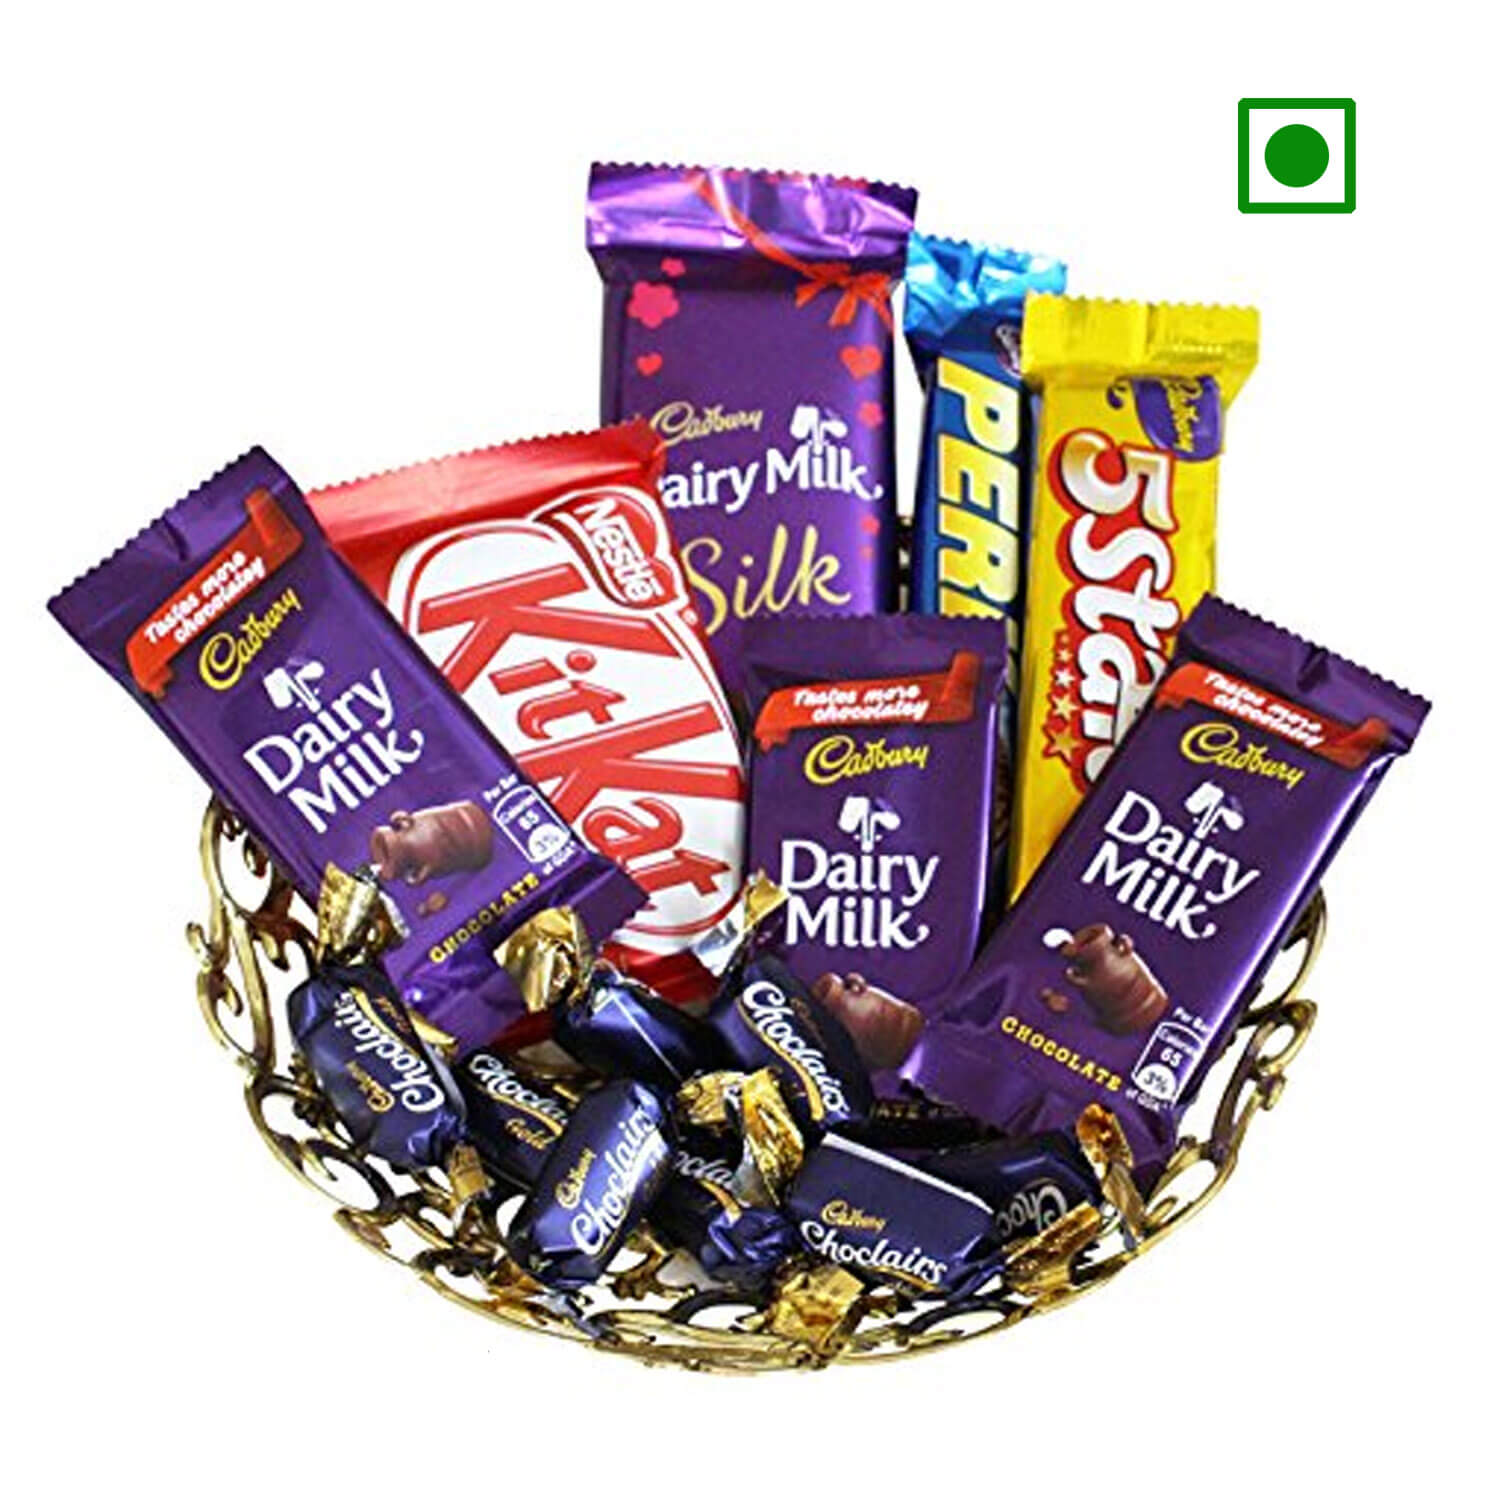 Amazon.com : Chocolate Gift Basket Premium of Chocolates, Cookies, and Candy  by GourmetGiftBaskets.com : Gourmet Chocolate Gifts : Grocery & Gourmet Food